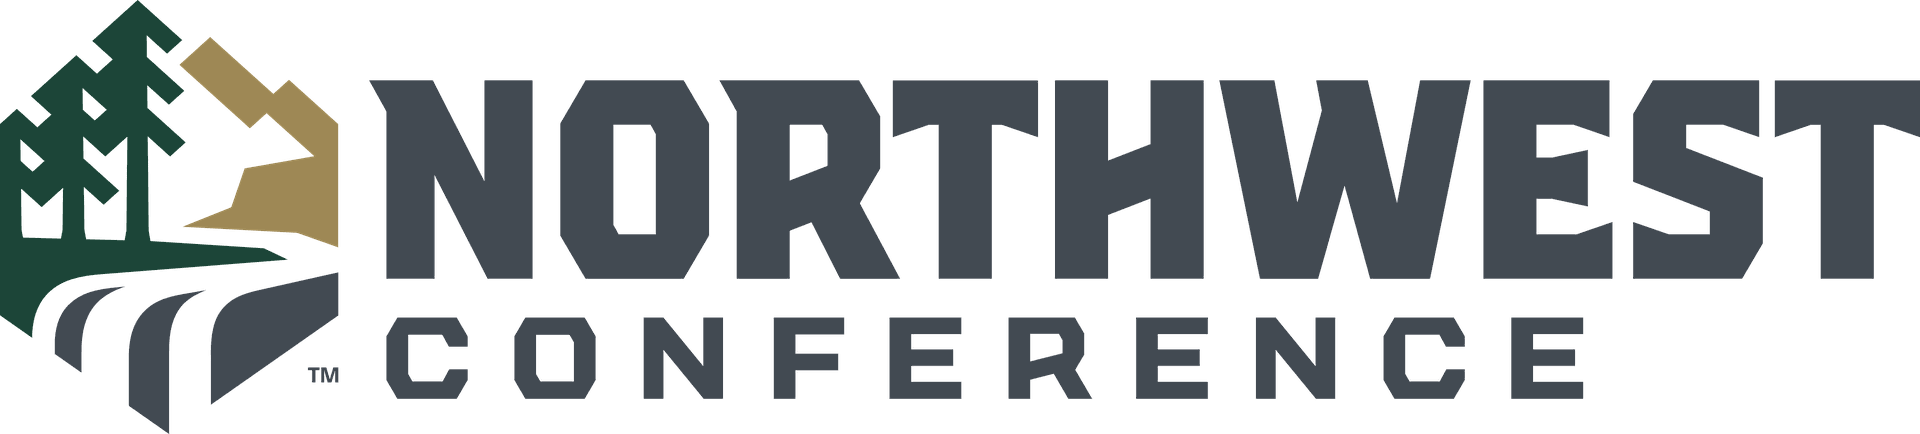 Northwest Conference